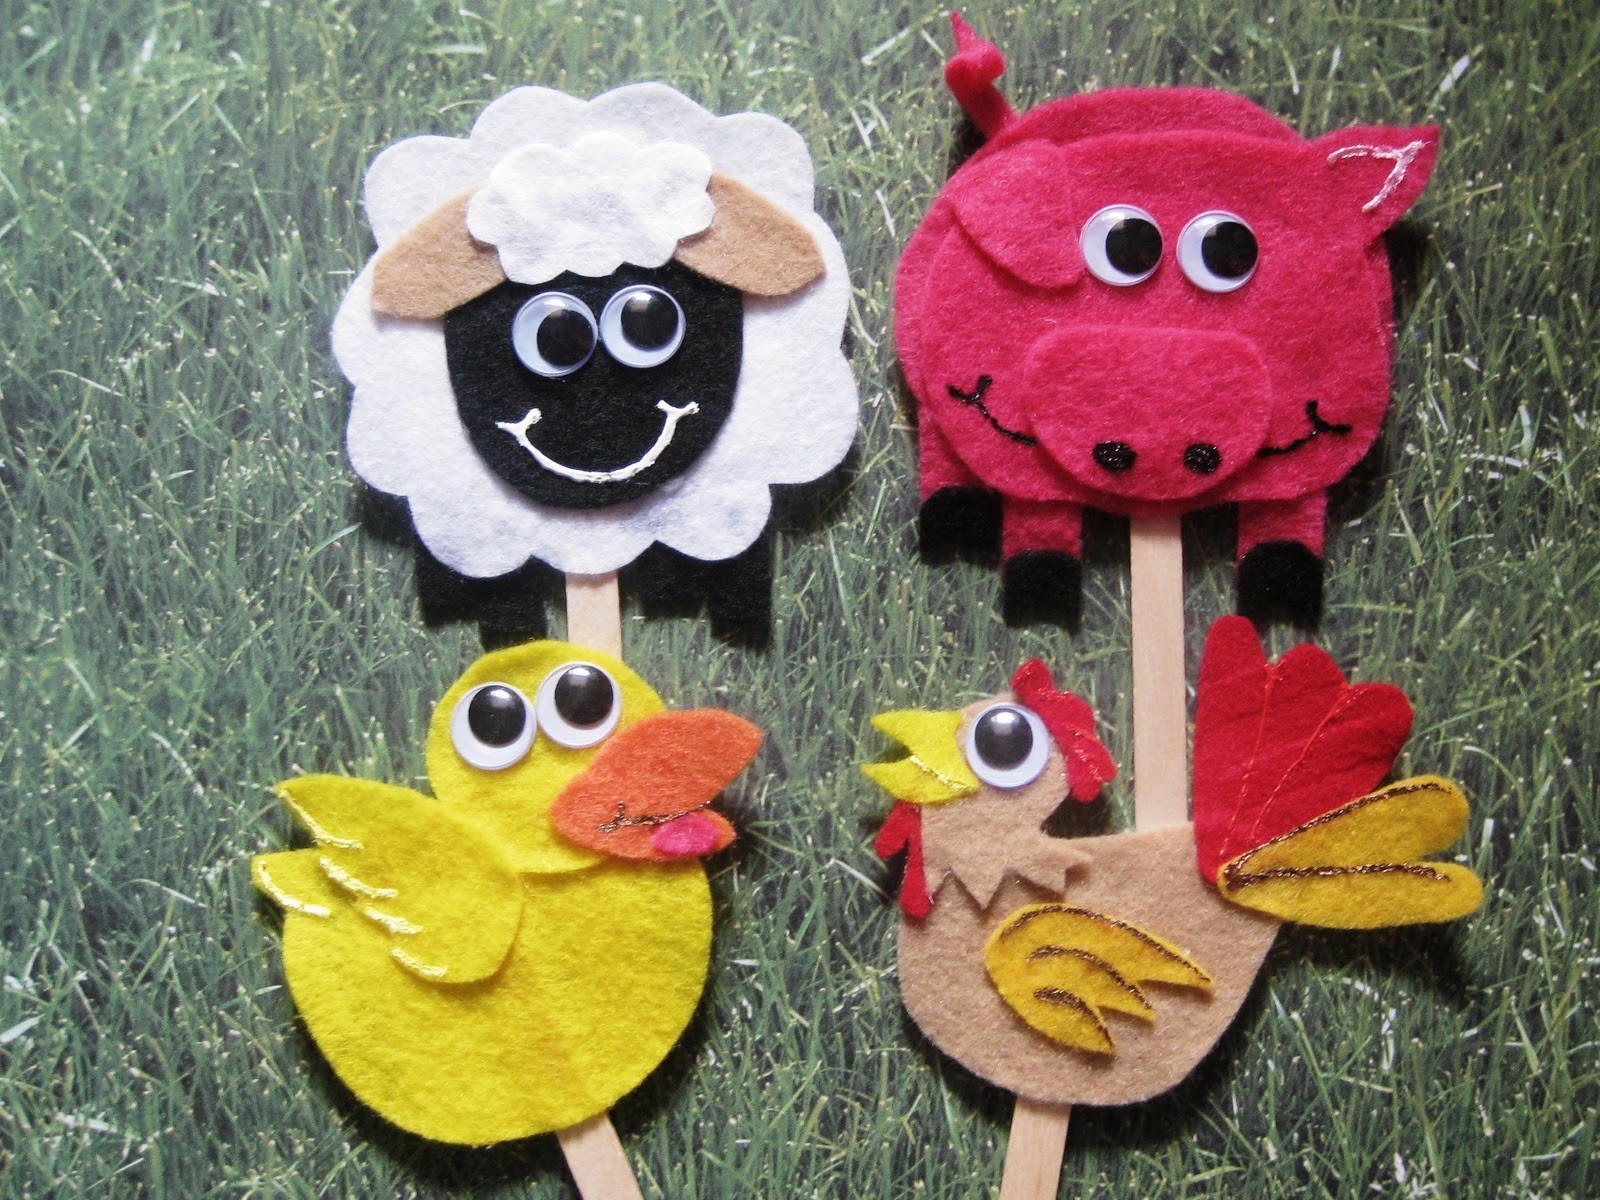 Animal Art Projects For Kids
 Ashley s Craft Corner Farm animals on a stick